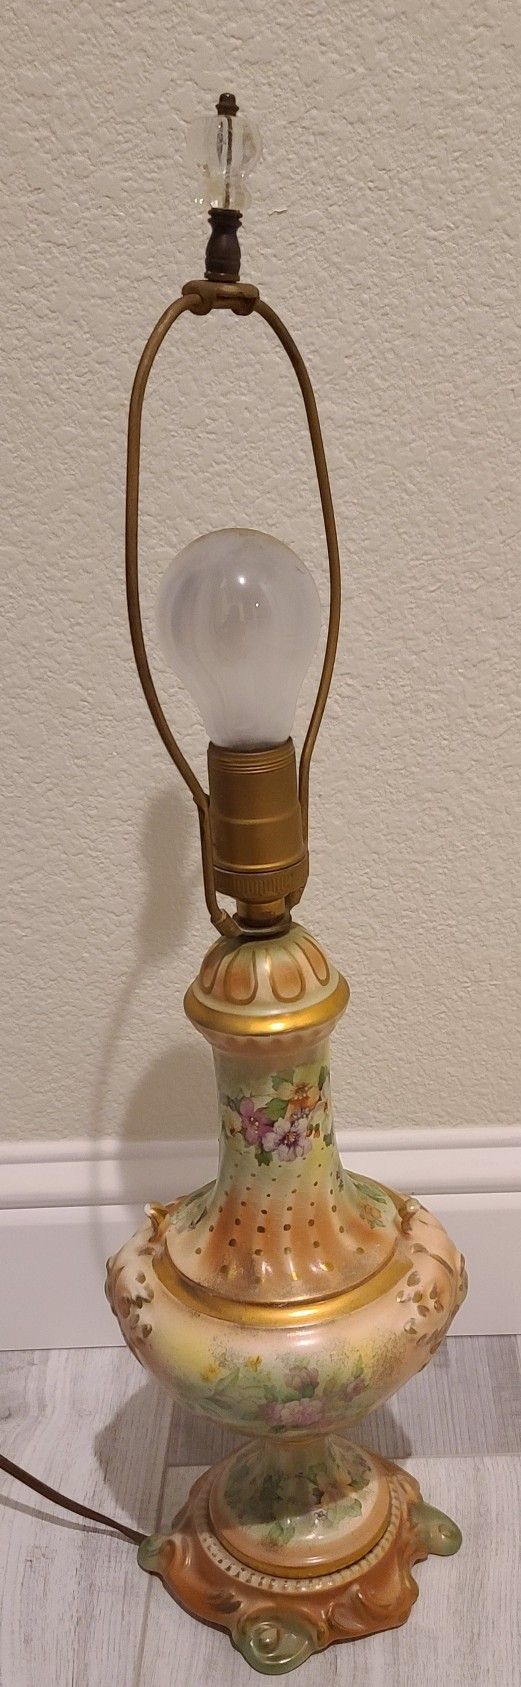 Vintage Neoclassical Urn Porcelain Lamp 
Victorain or Hollywood Regency Style Table Lamp.